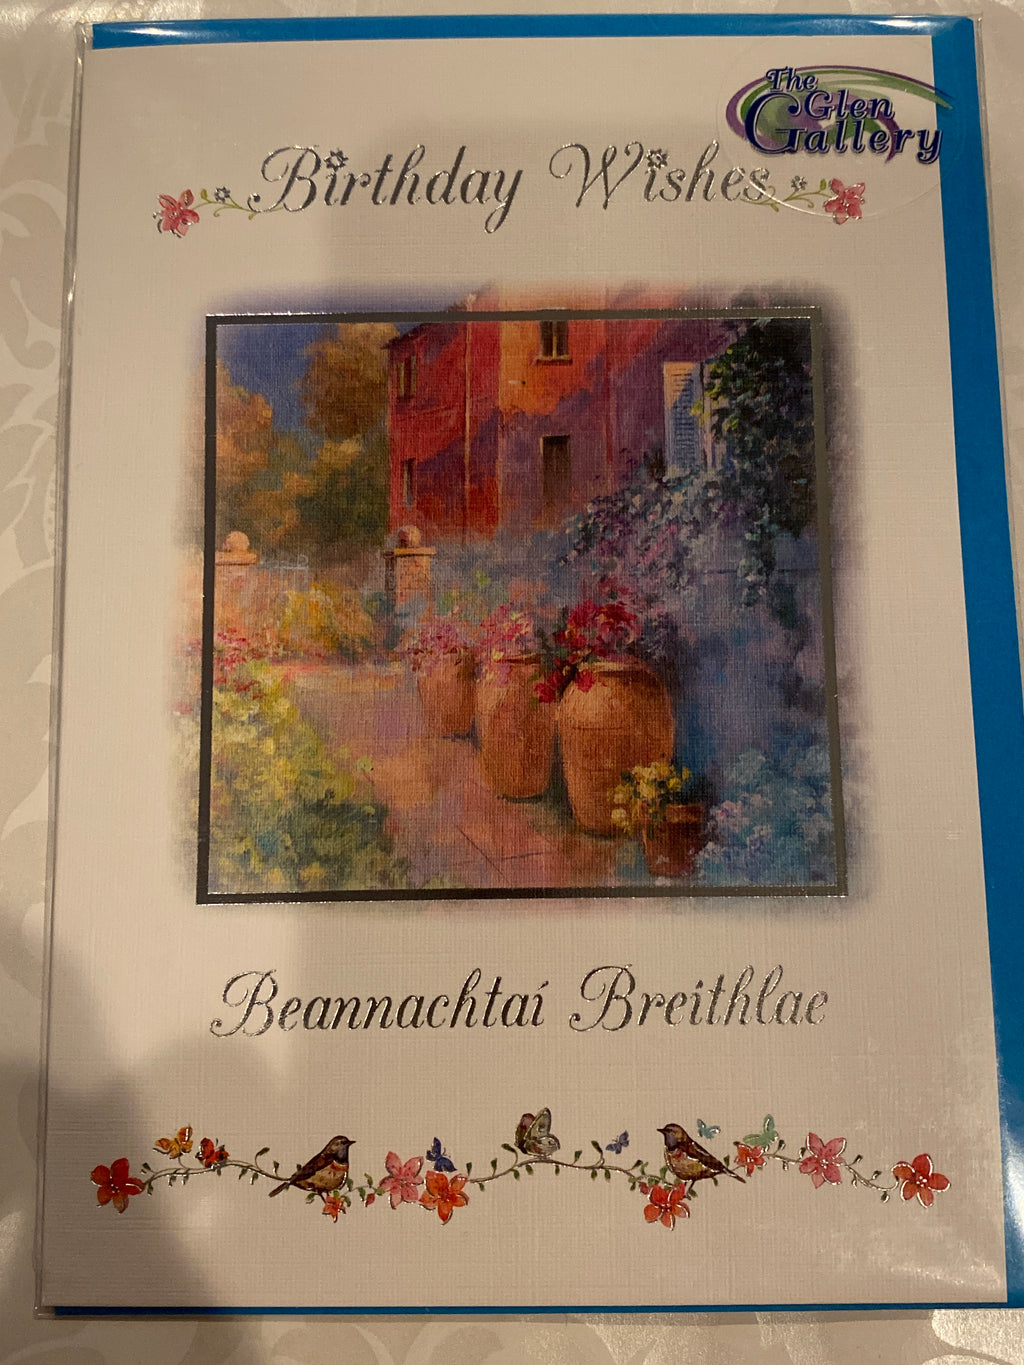 Birthday wishes card